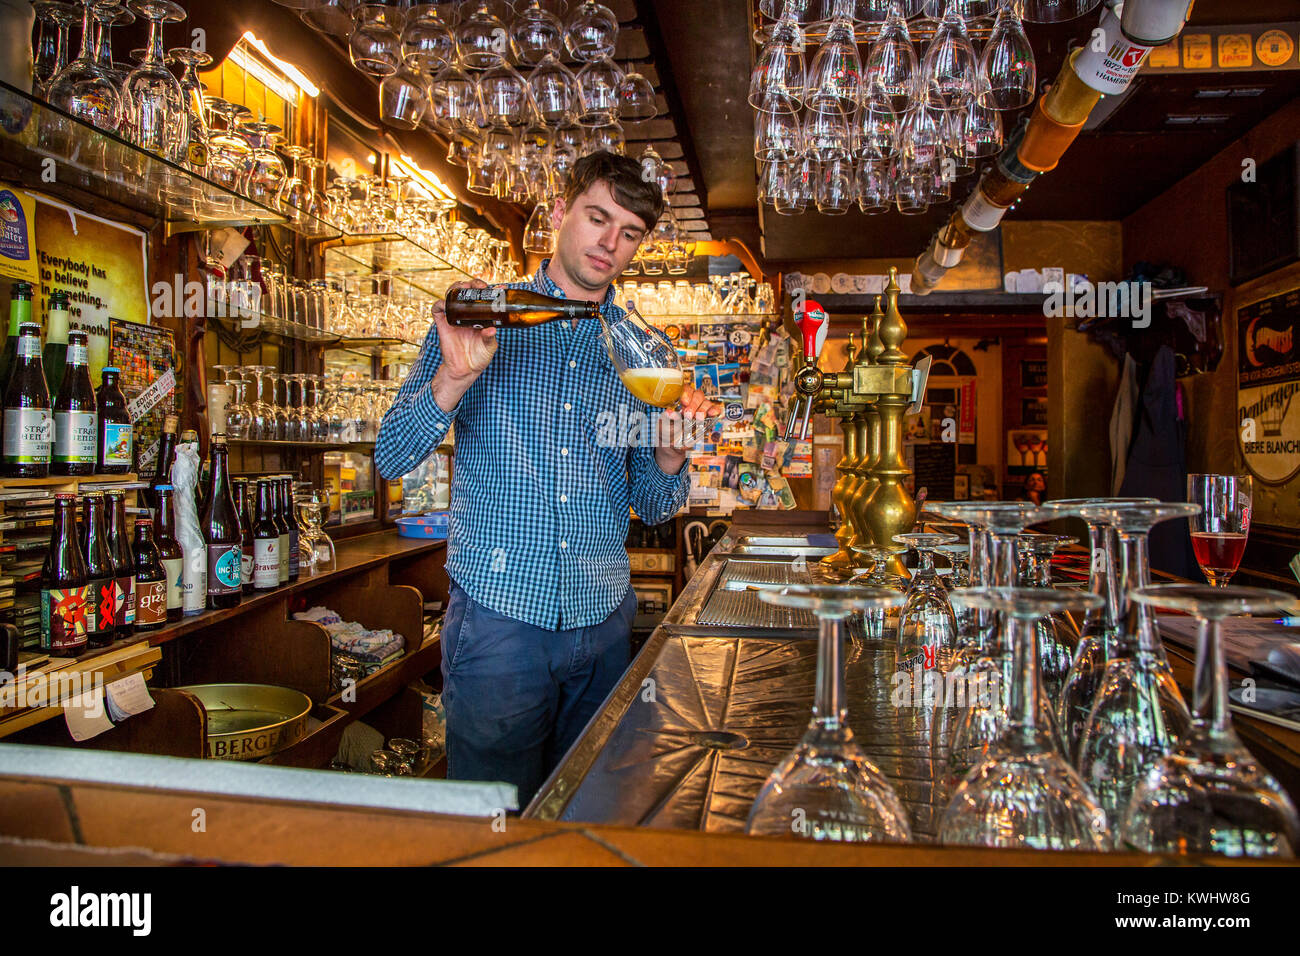 Bartender pouring Belgian beer in glass in Flemish café 't Brugs Beertje in Bruges / Brugge, West Flanders, Belgium Stock Photo